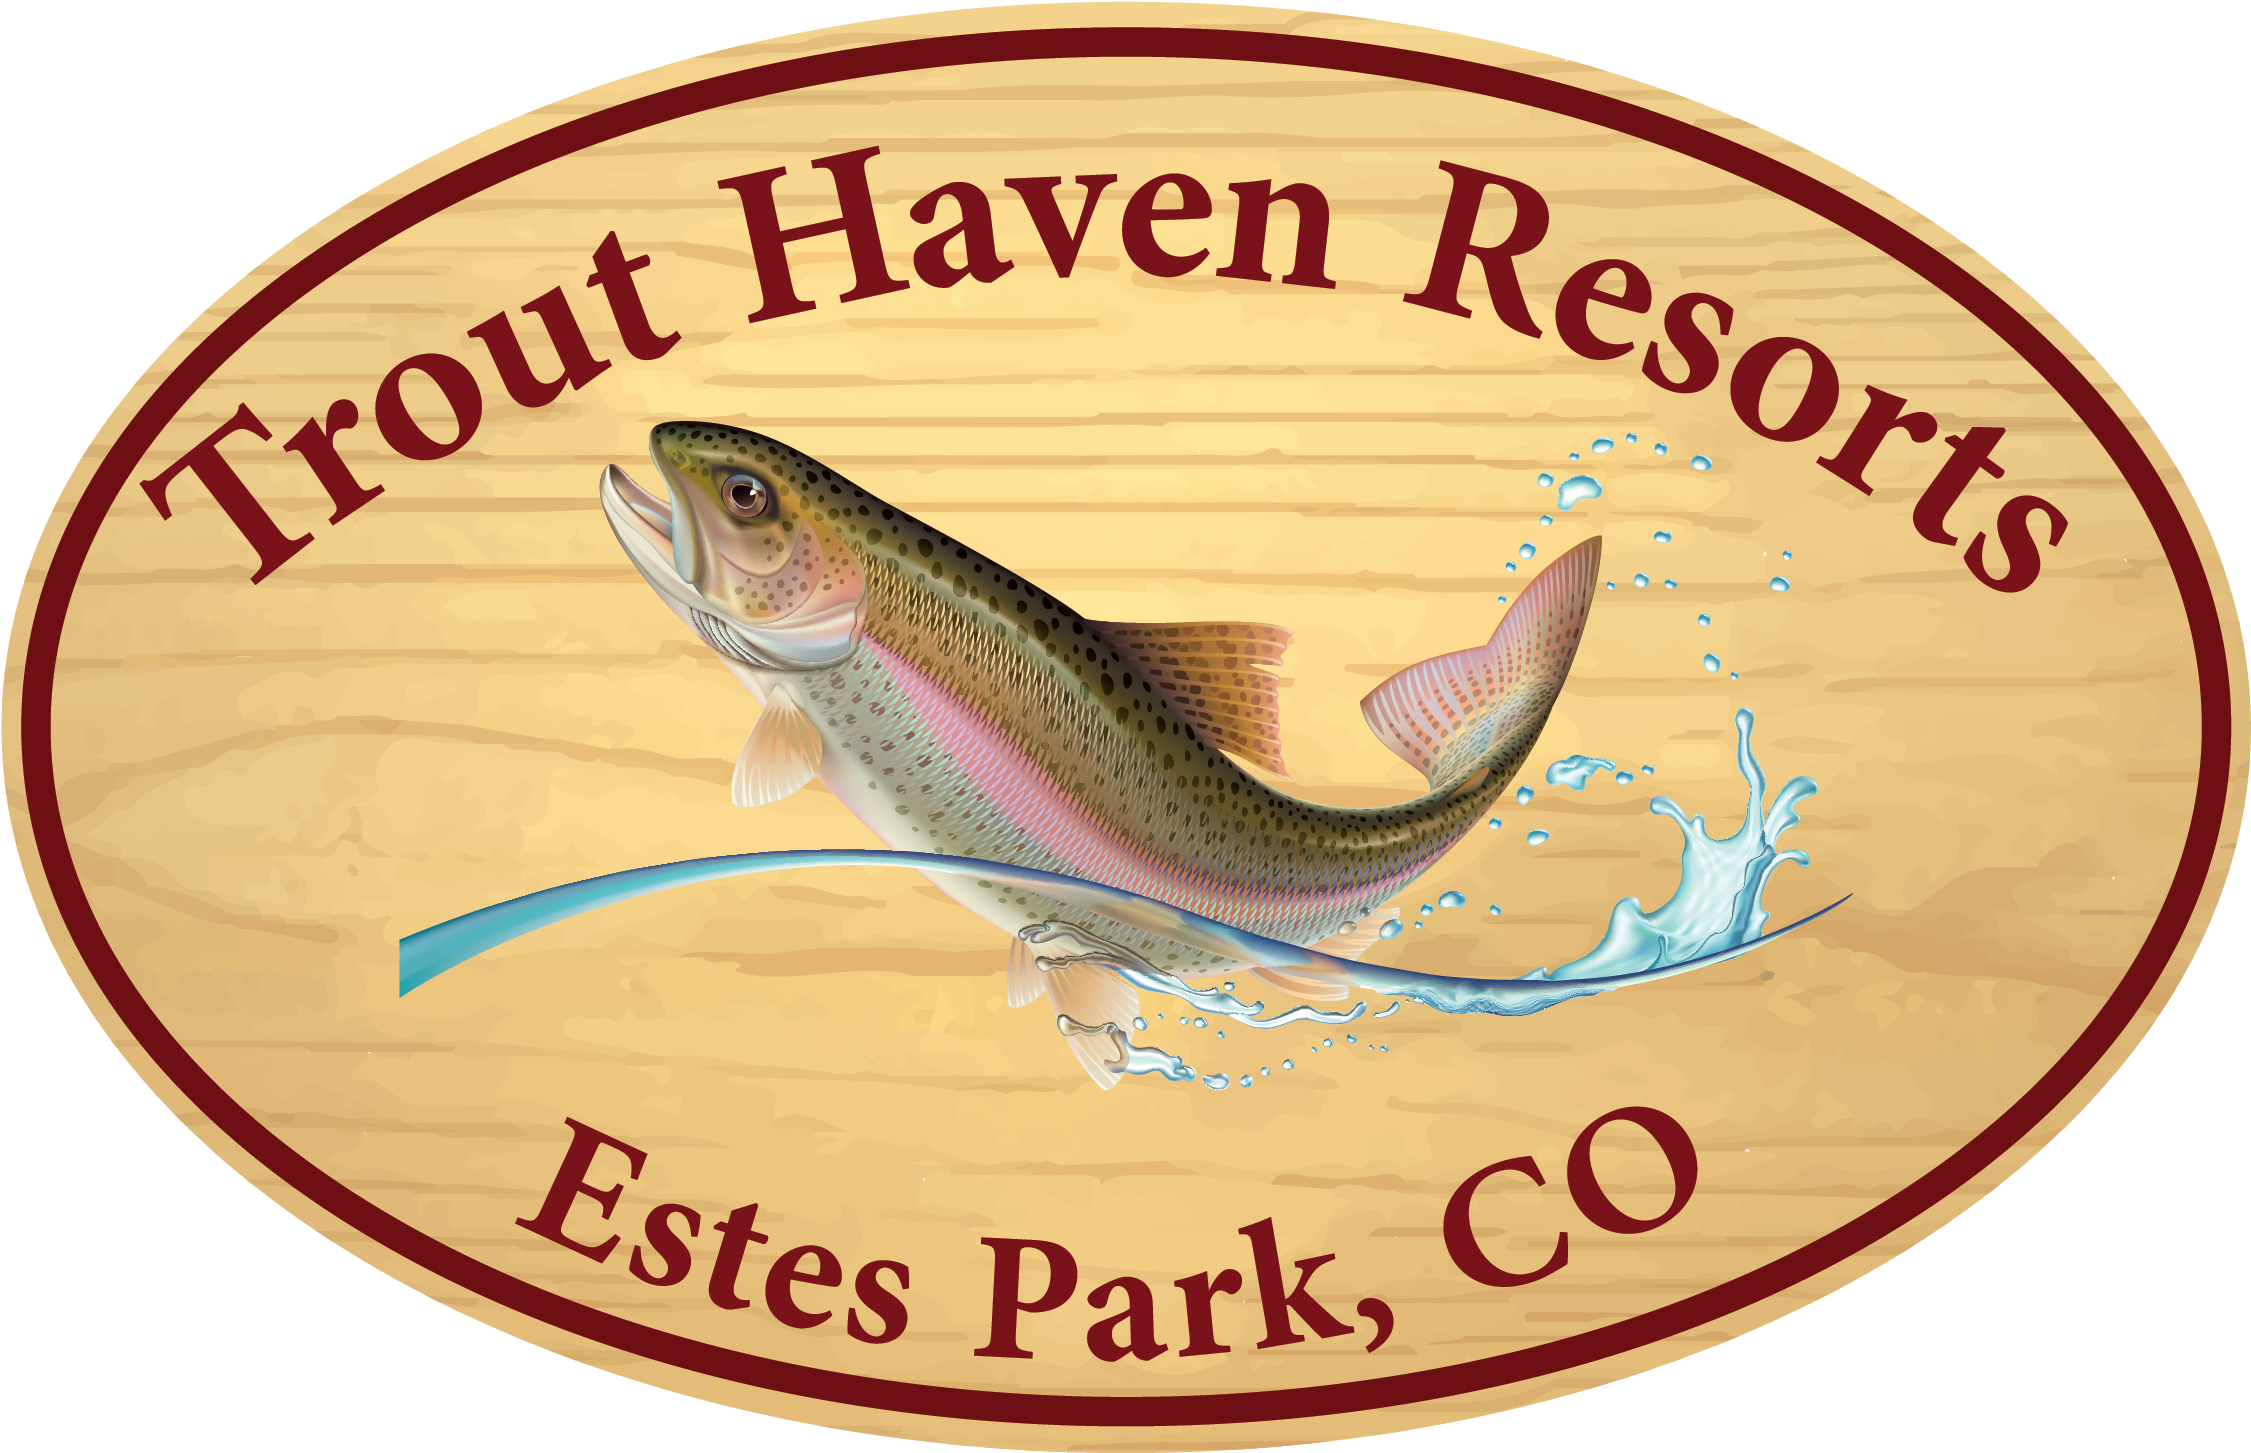 Haven Resorts Estes Park Resort - Trout Haven Resorts (2345x1503)